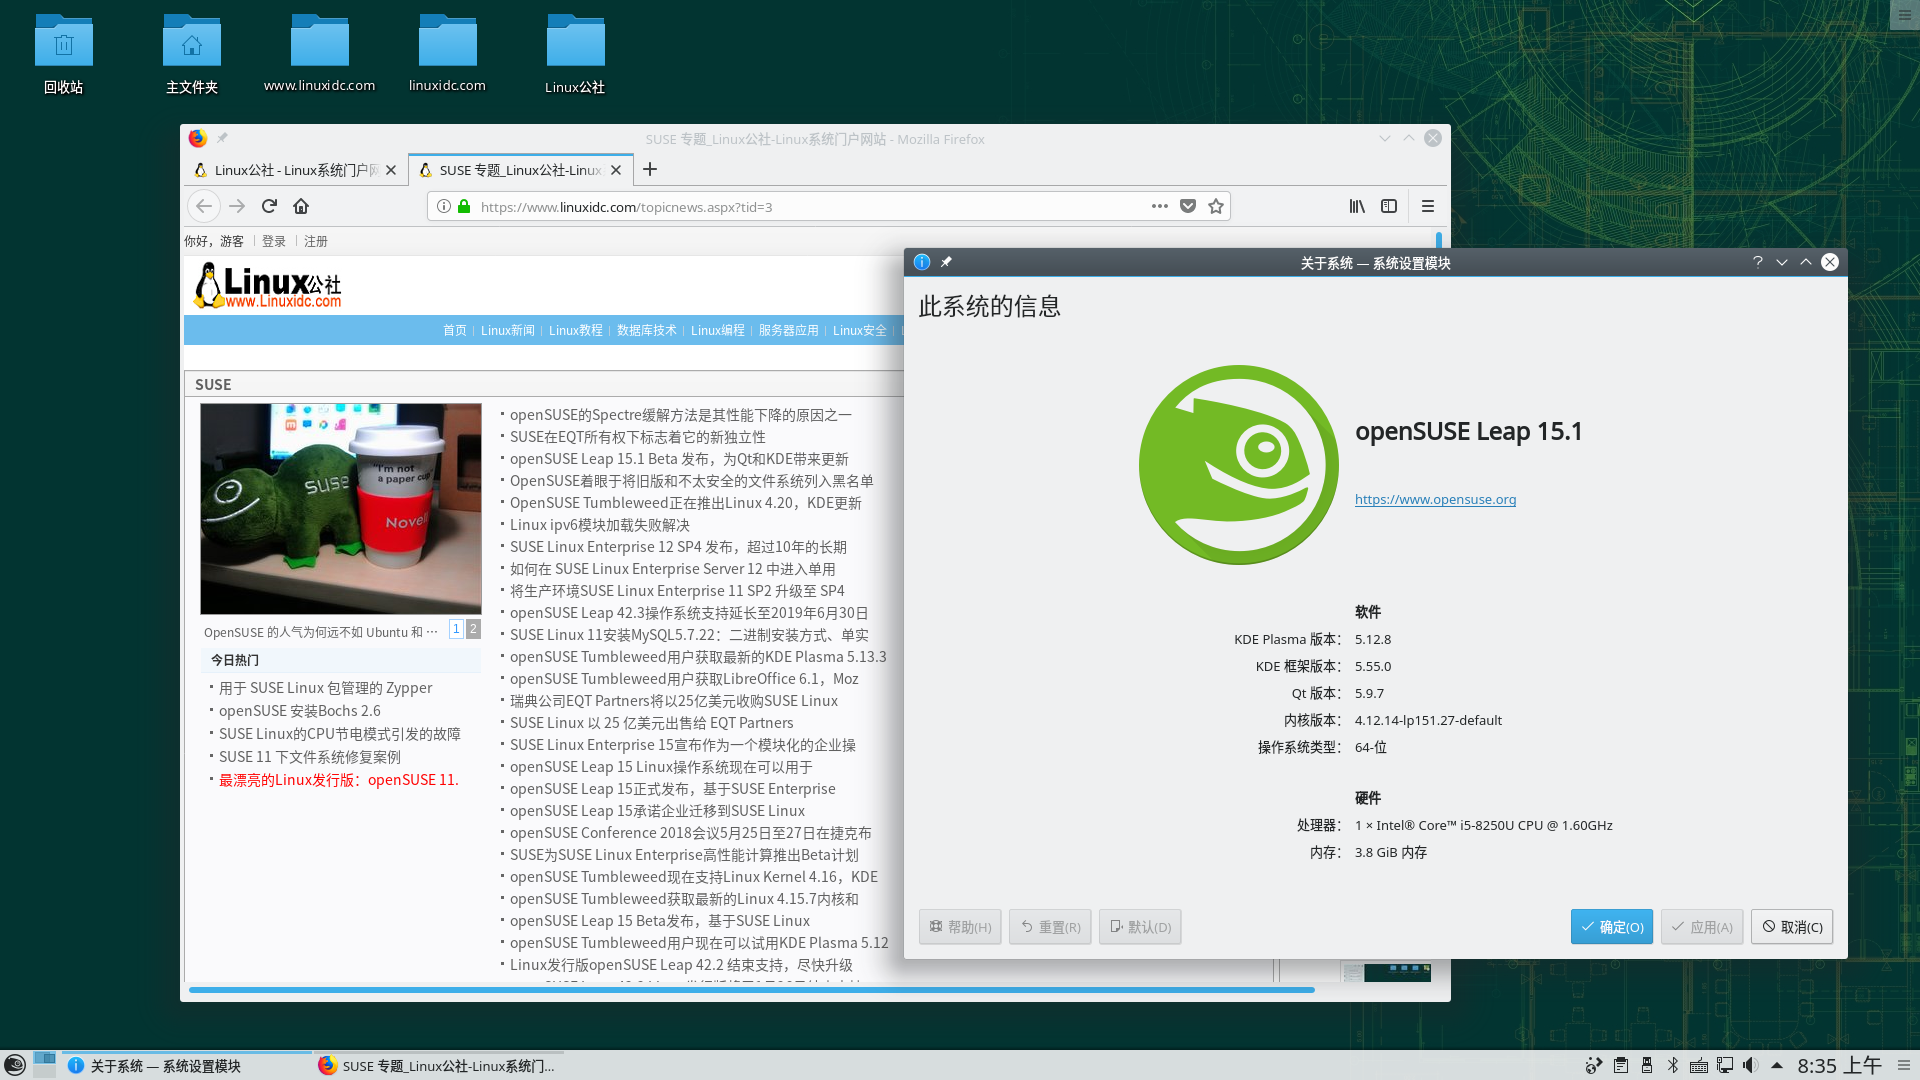 教你如何将 openSUSE Leap 15.0 升级到 openSUSE Leap 15.1教你如何将 openSUSE Leap 15.0 升级到 openSUSE Leap 15.1